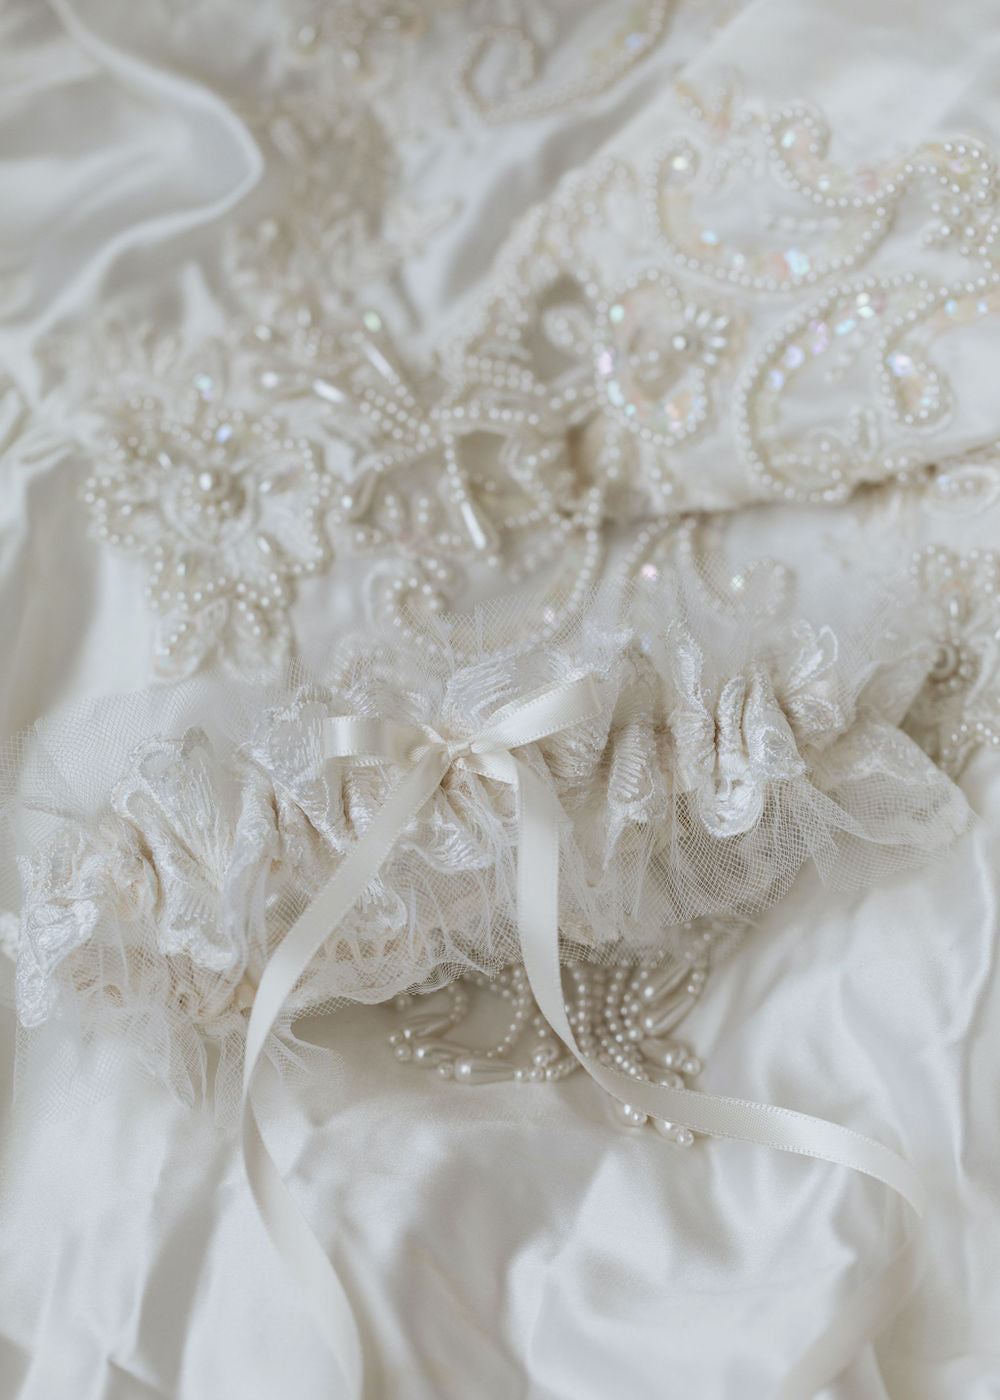 tulle and lace wedding garter handmade from bride's mother's wedding dress & veil by expert wedding heirloom designer, The Garter Girl